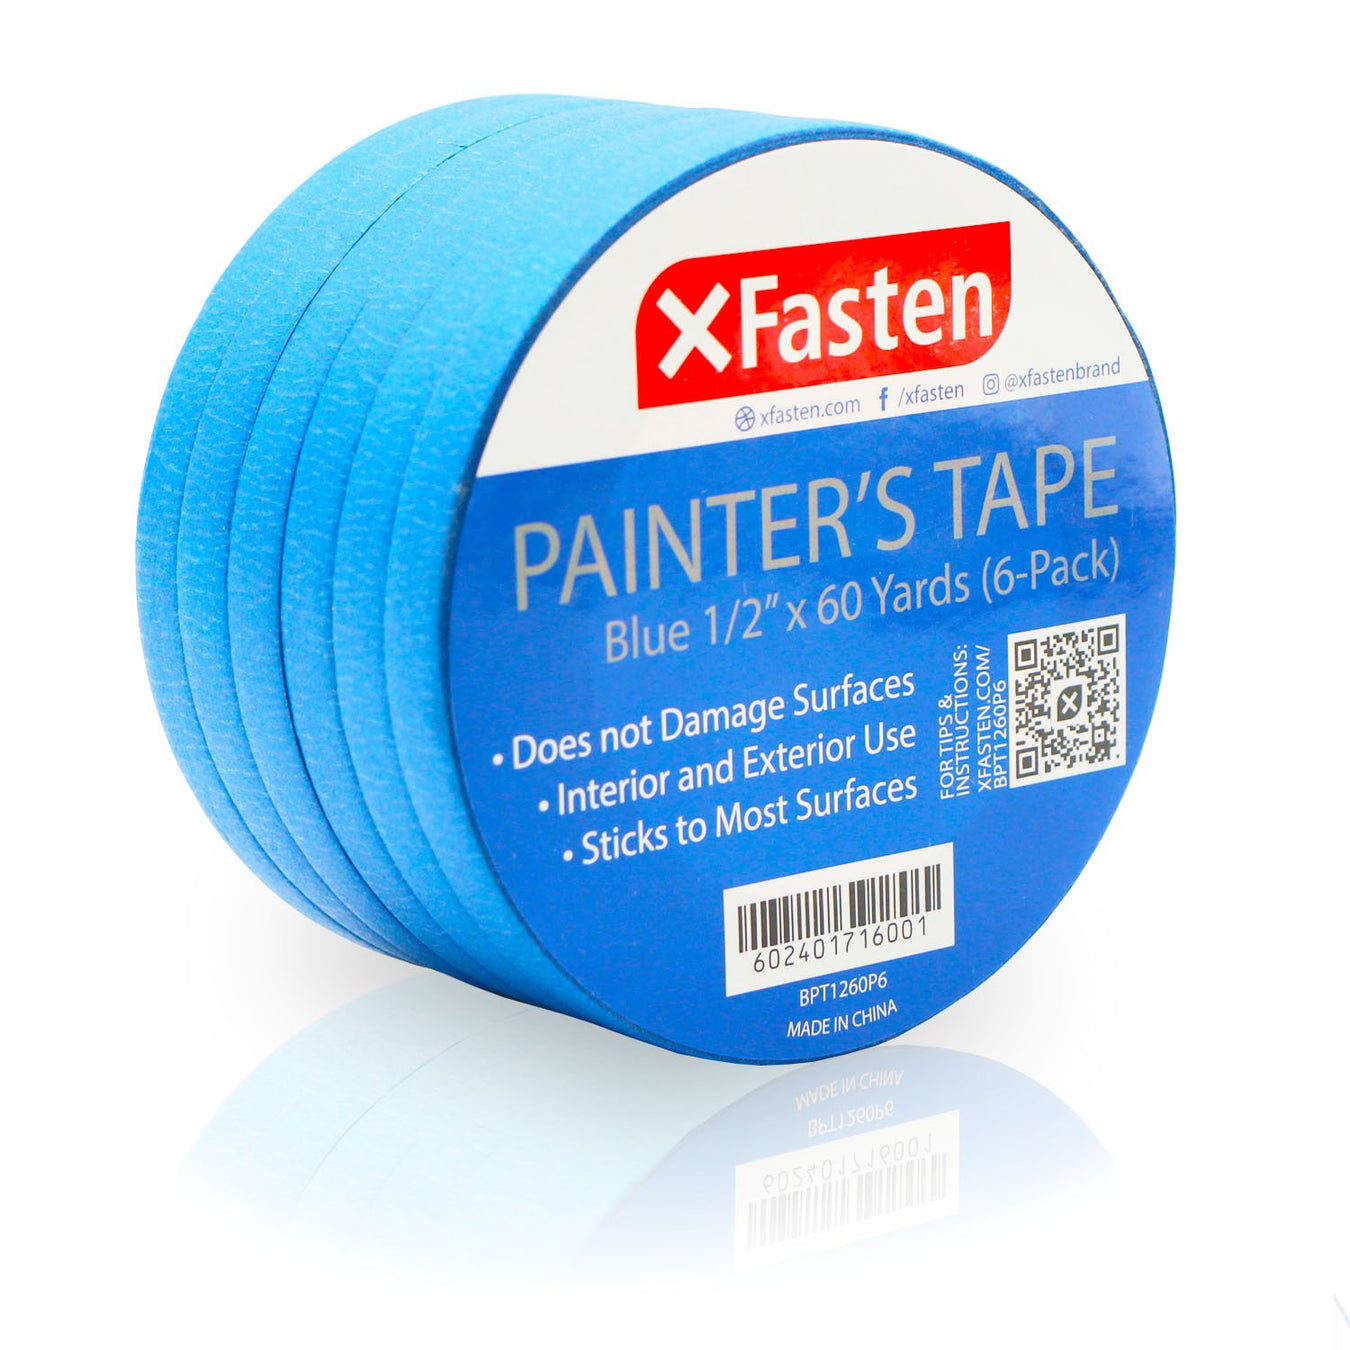 Painter's Tape - XFasten